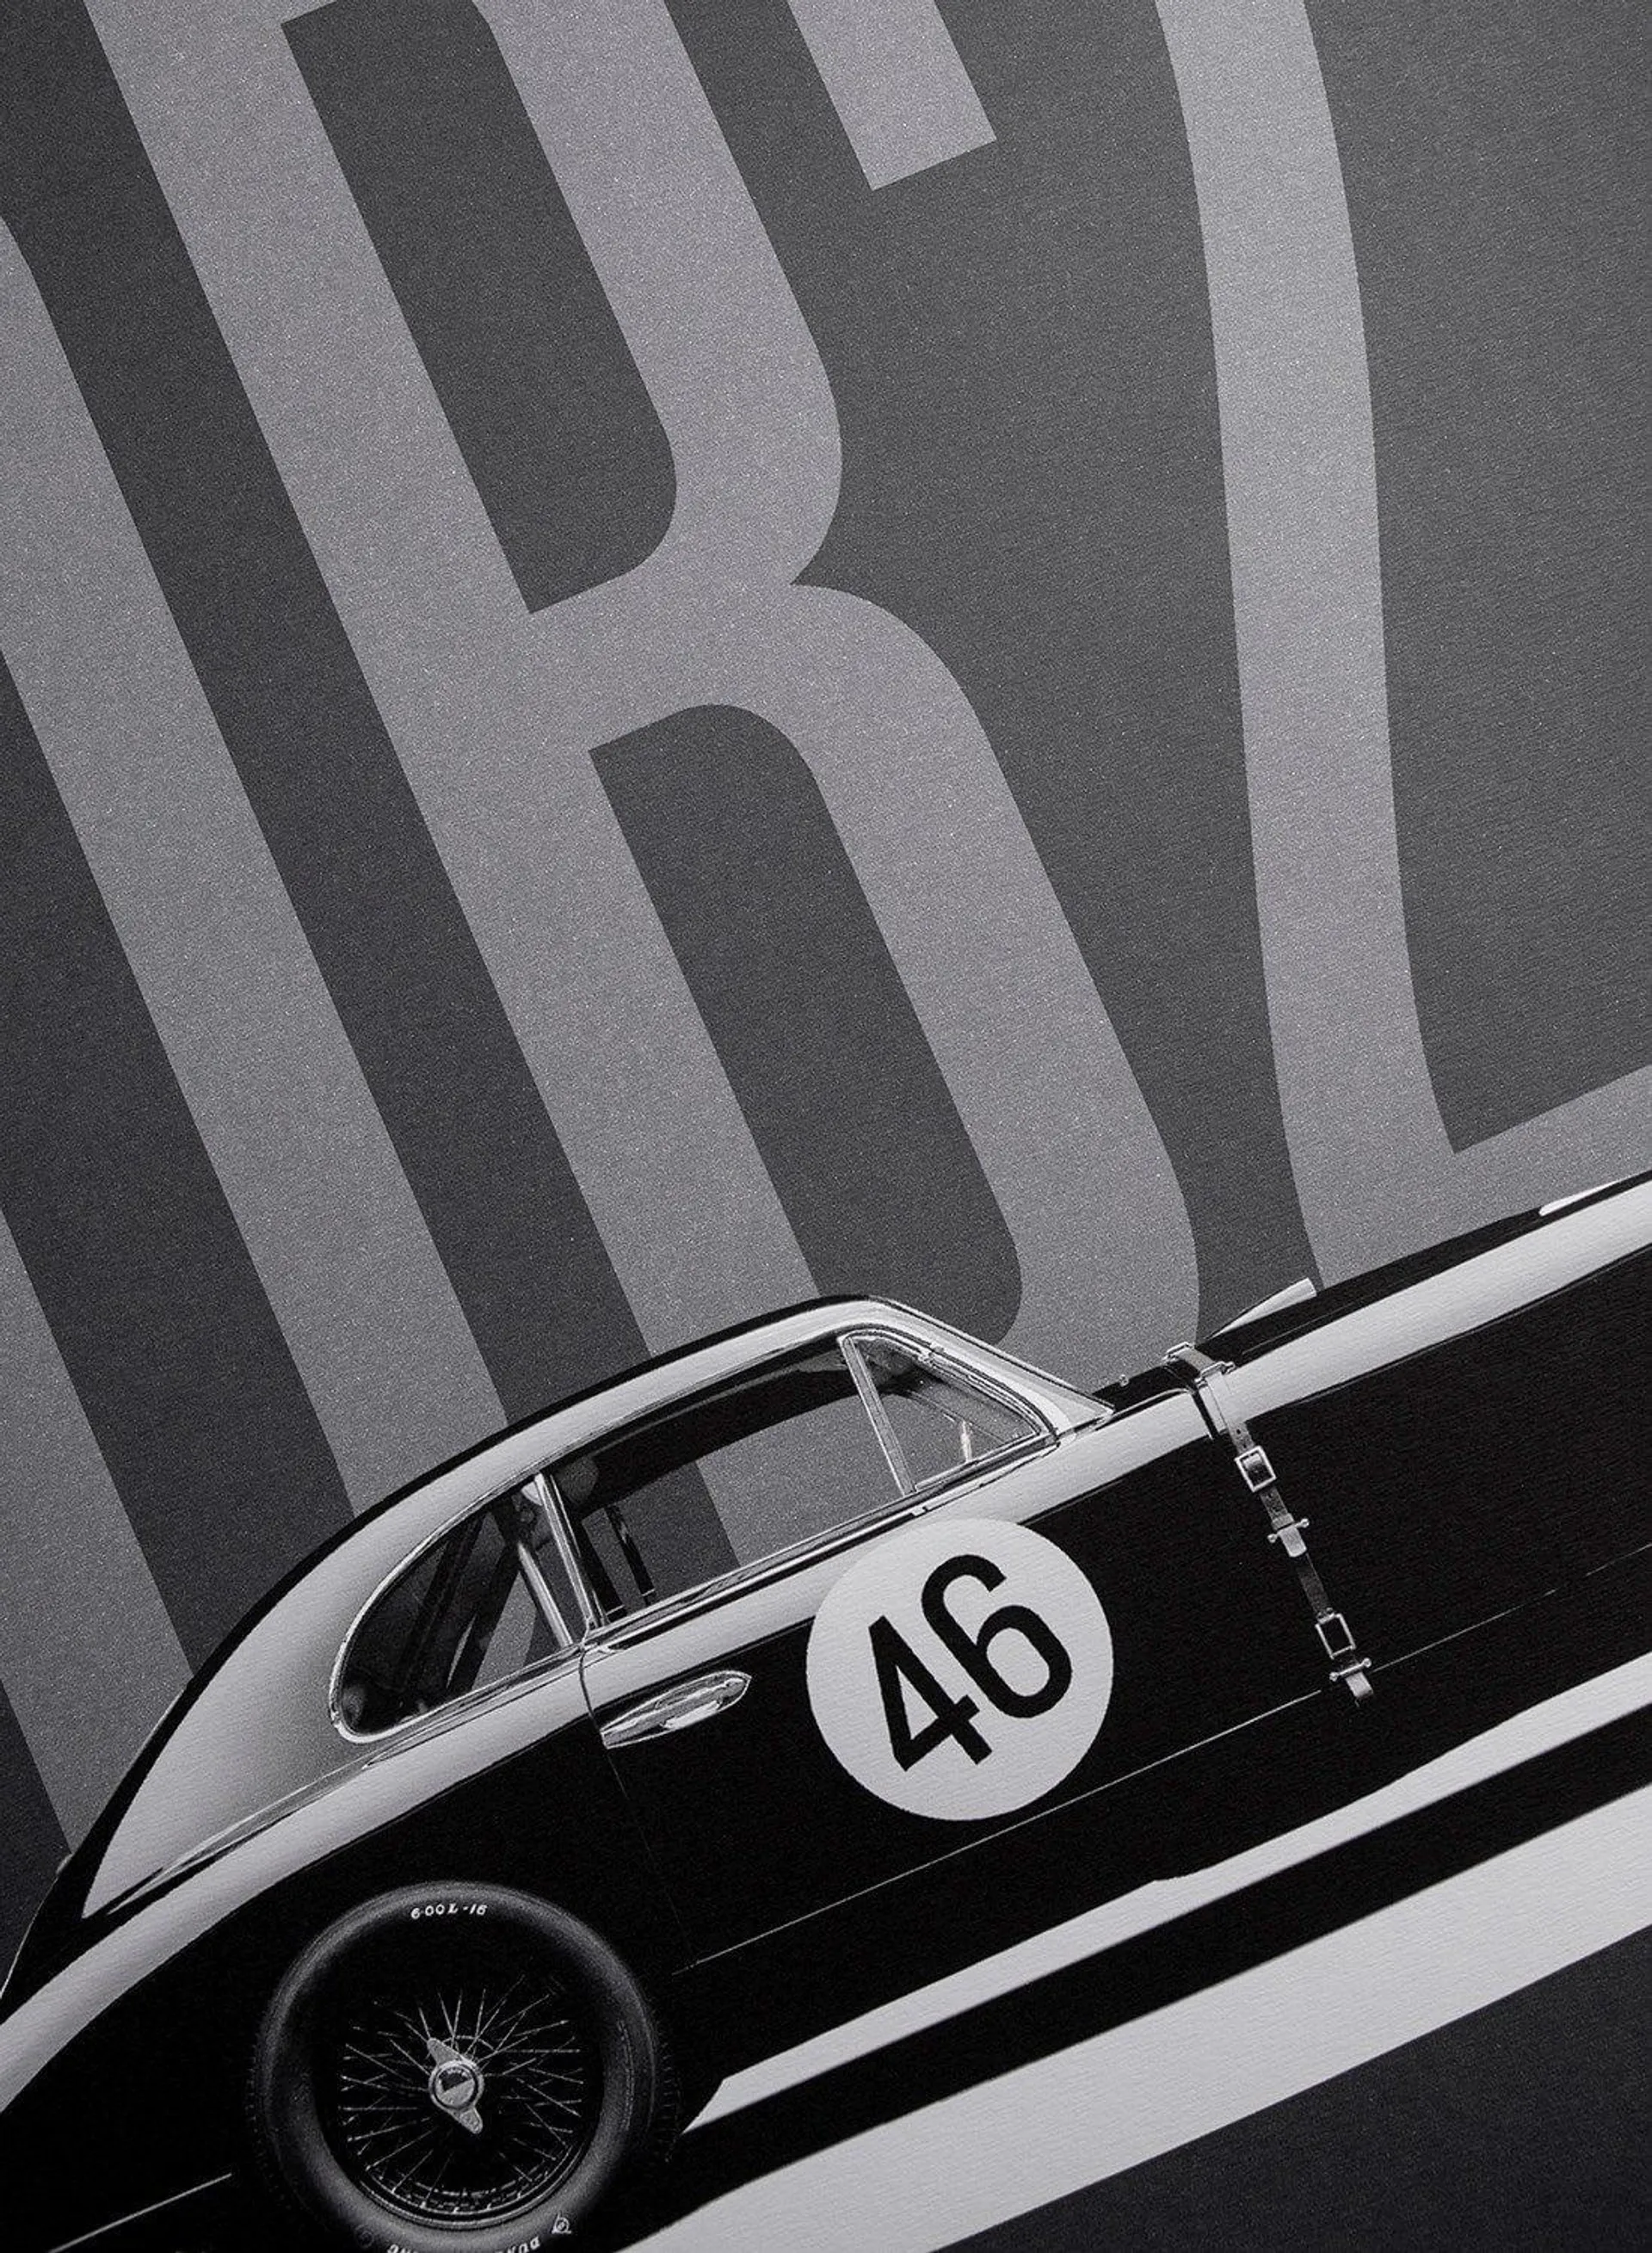 Lámina No.5 - Le Mans 1950